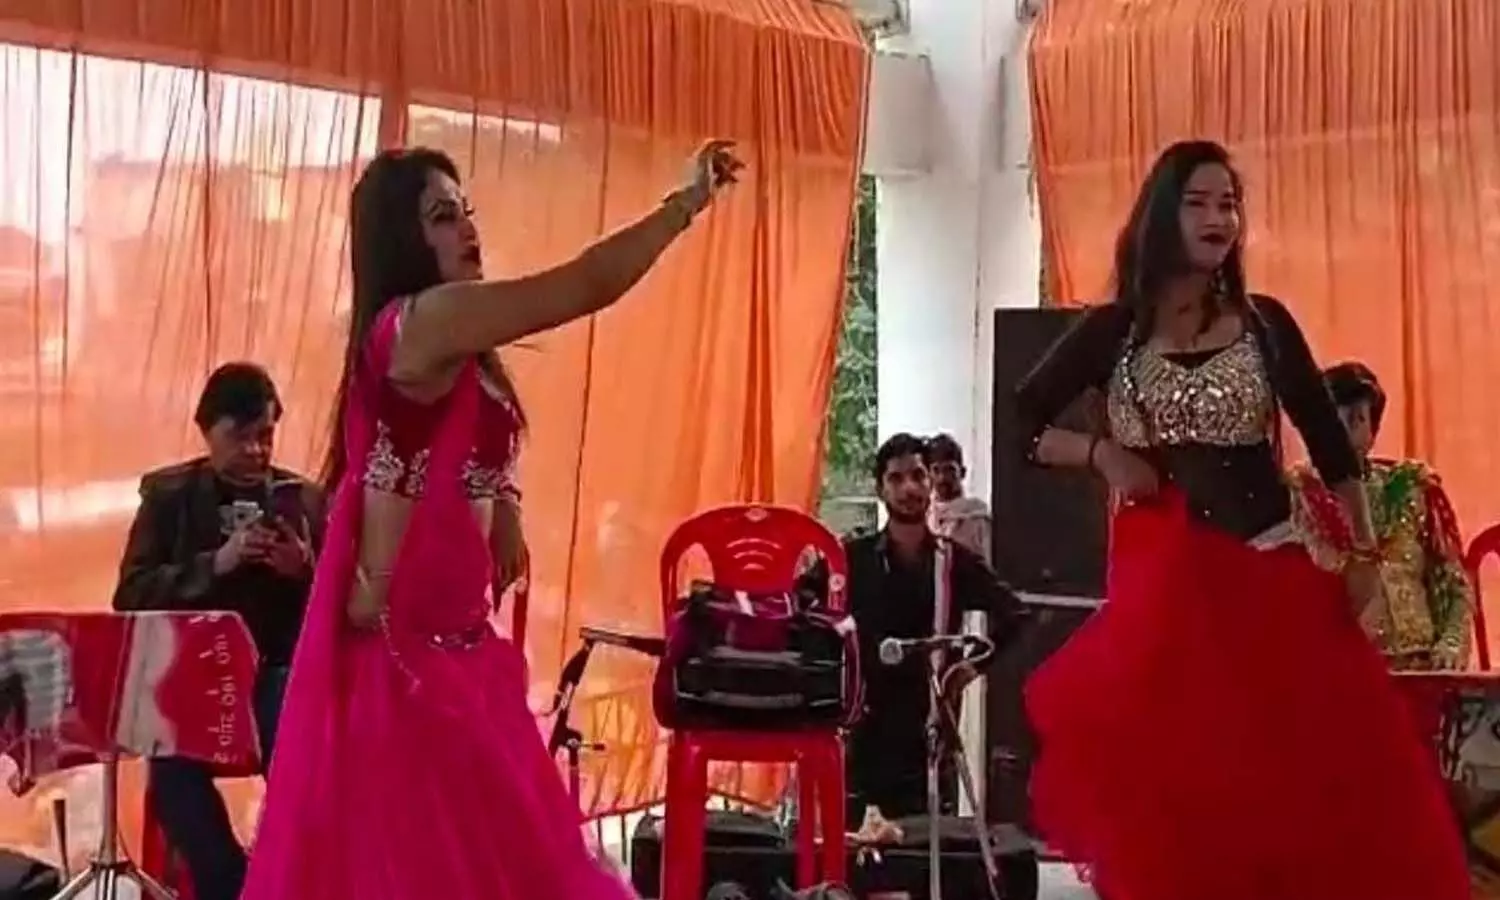 In Barabanki on Sardar Patel Jayanti, video of bar girls started obscene dance as soon as ministers left